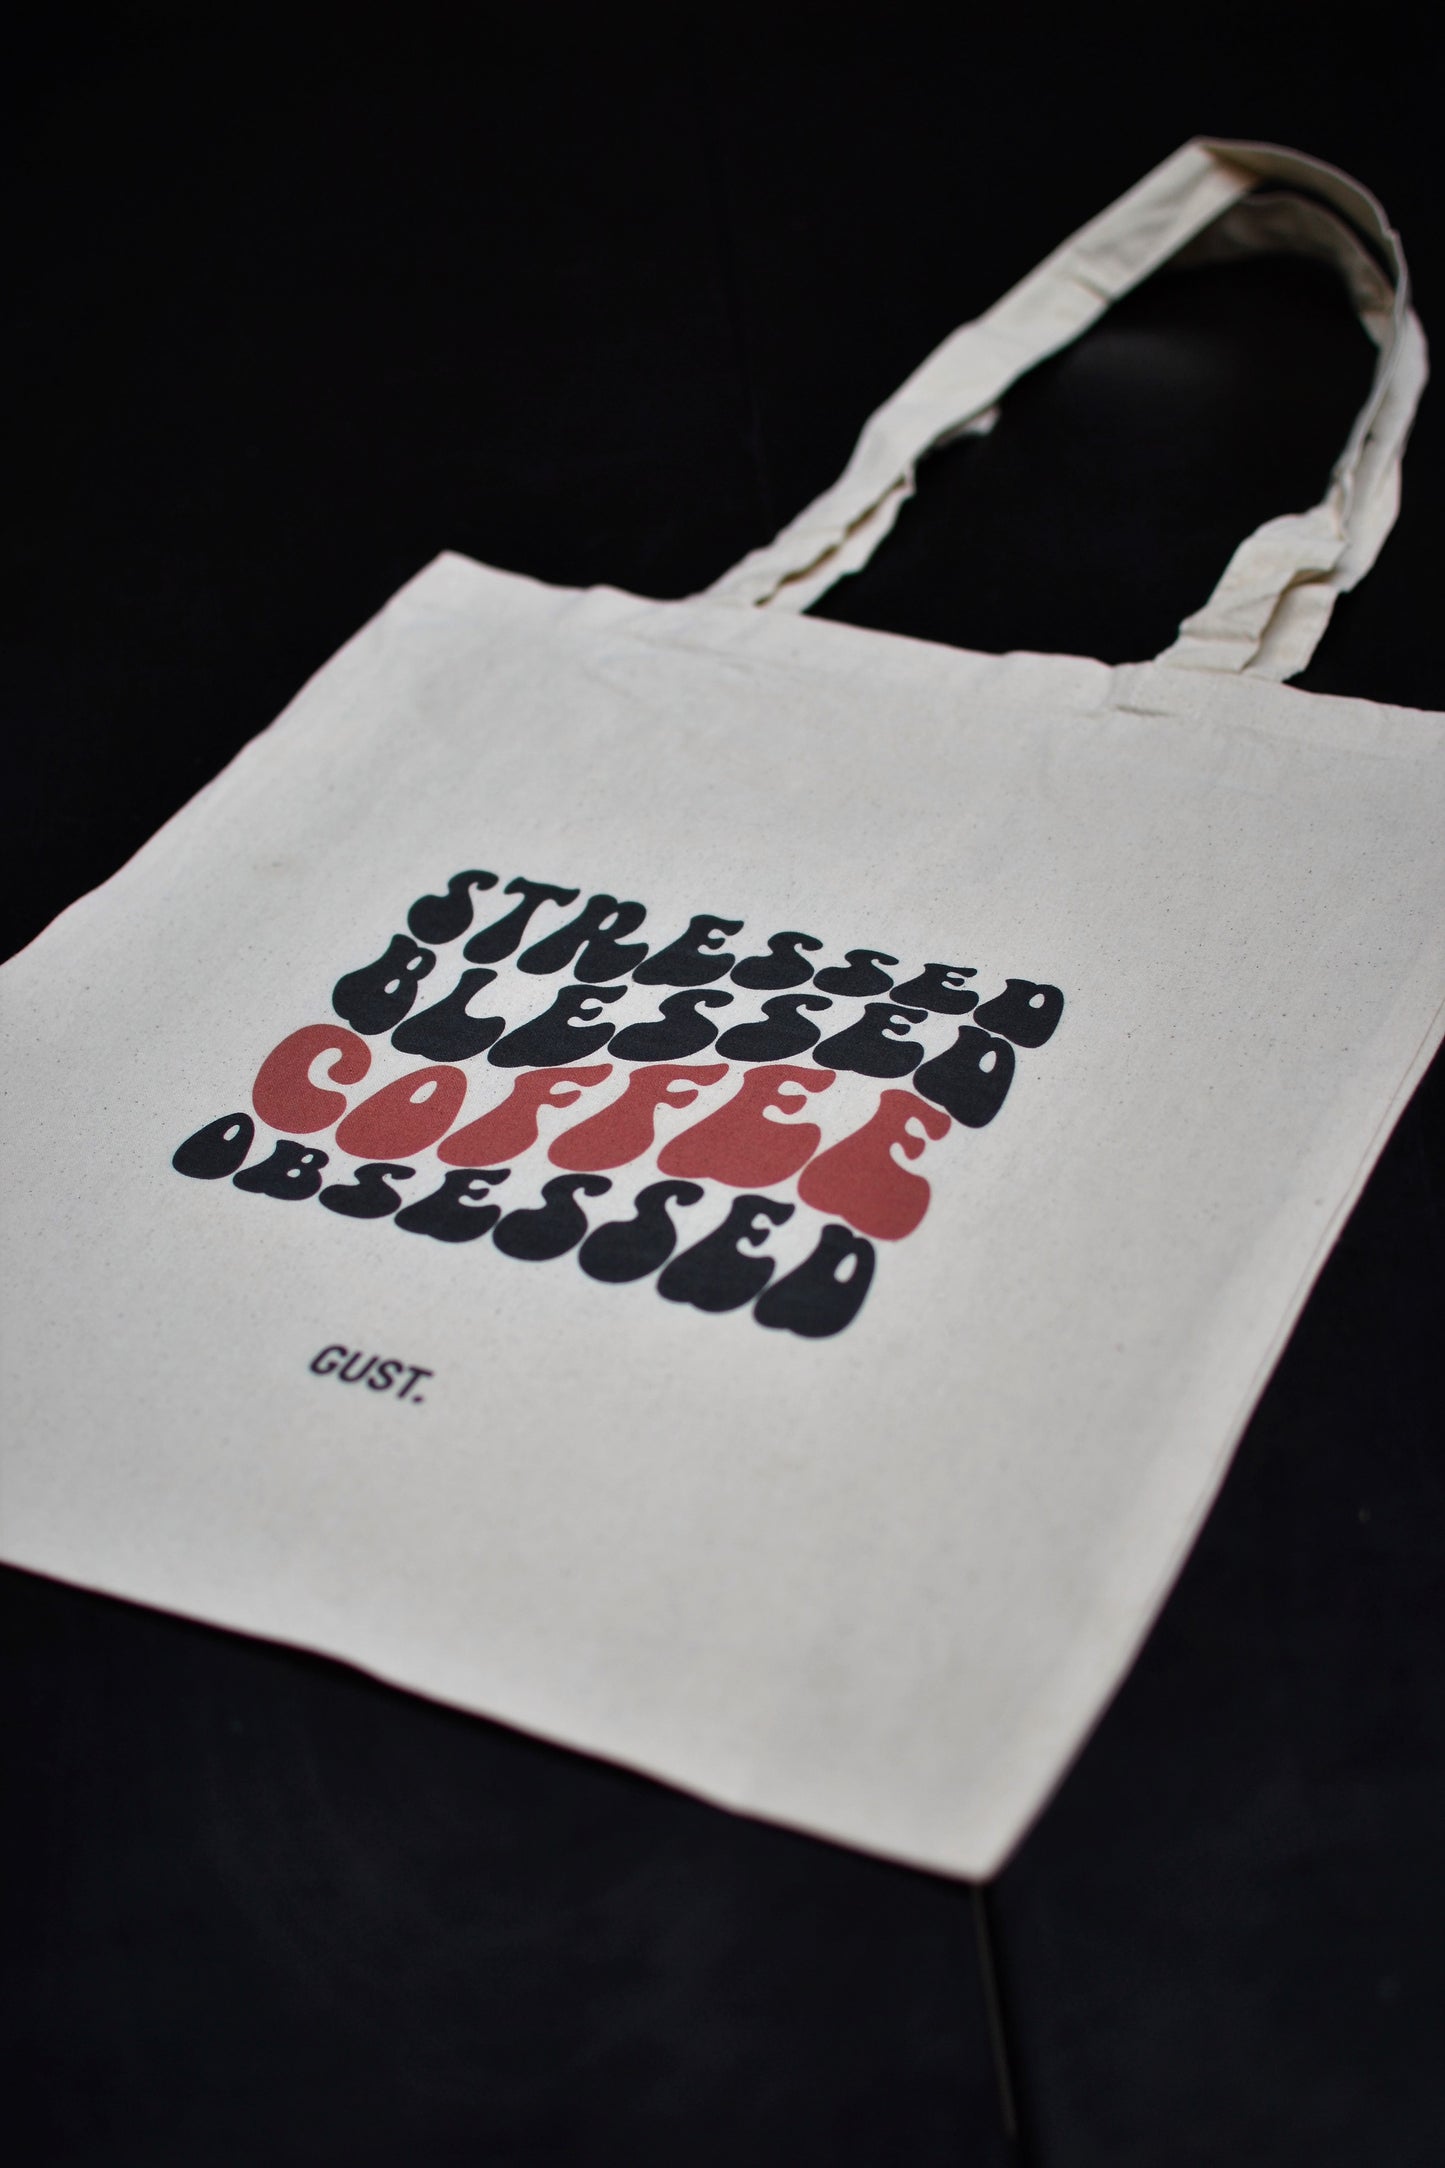 tote bag, merch, gear, gust coffee roasters, coffee obsessed, coffee gear, coffee merch